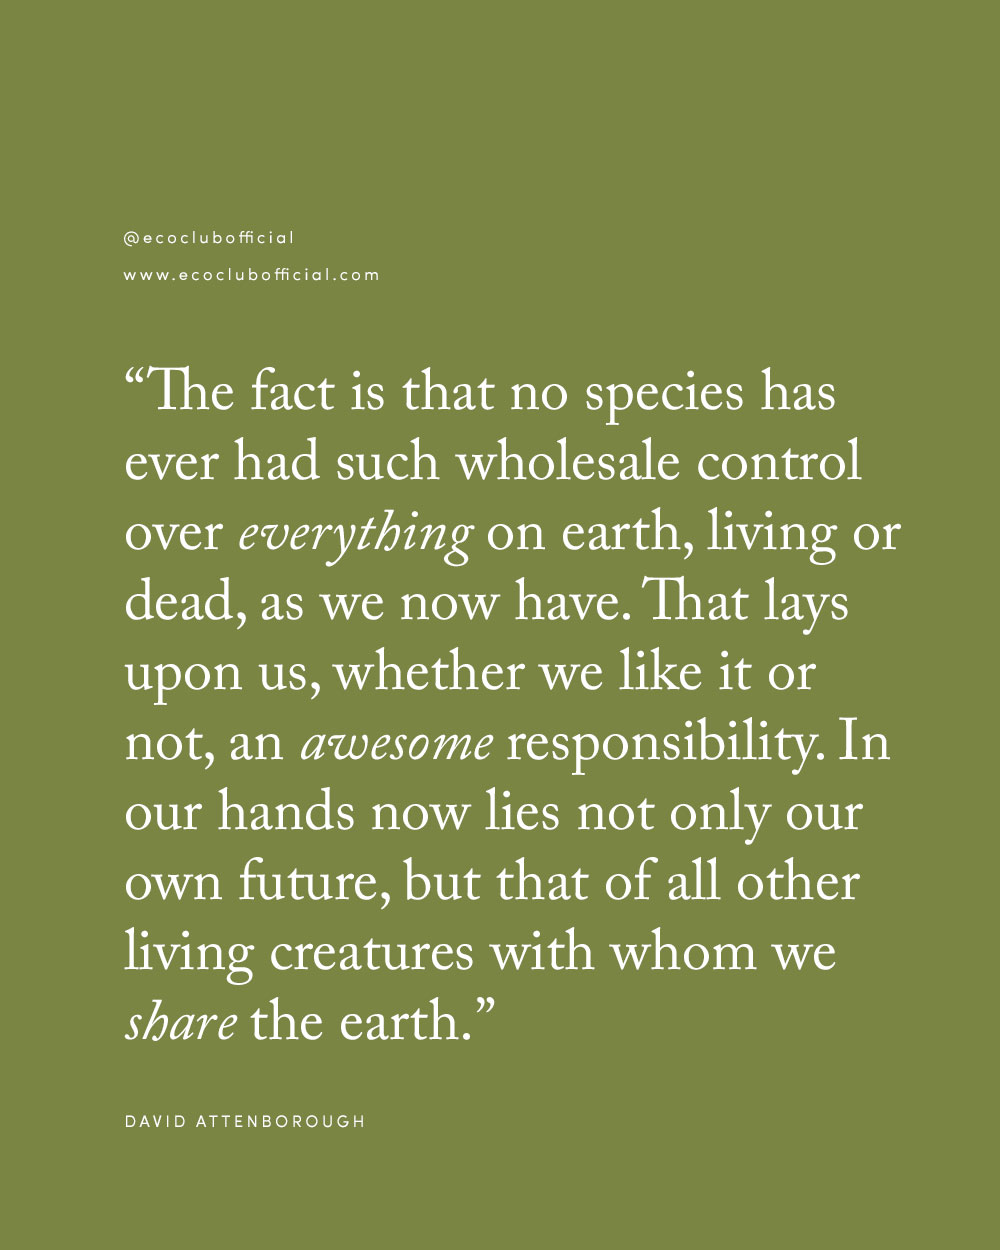 David Attenborough Quotes on the Environment via eco club